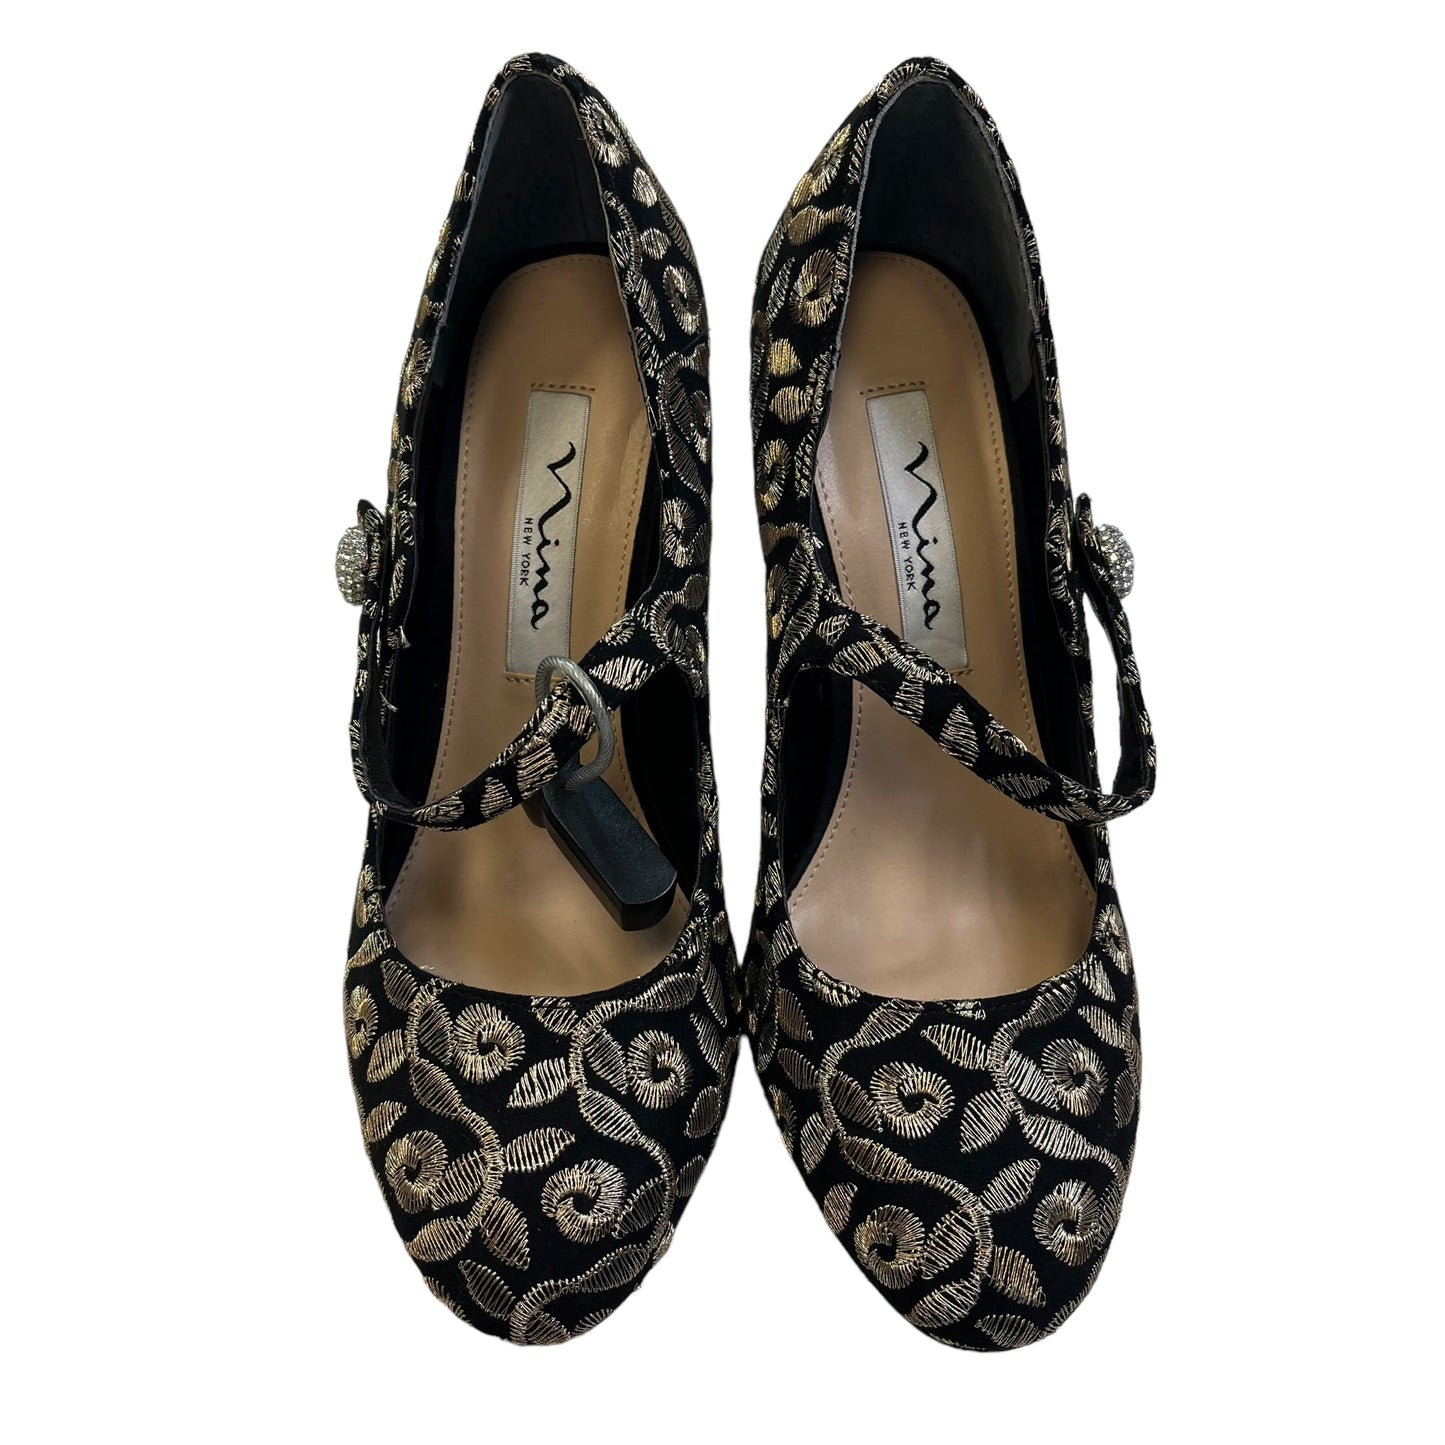 Black Shoes Heels Stiletto Nina, Size 6